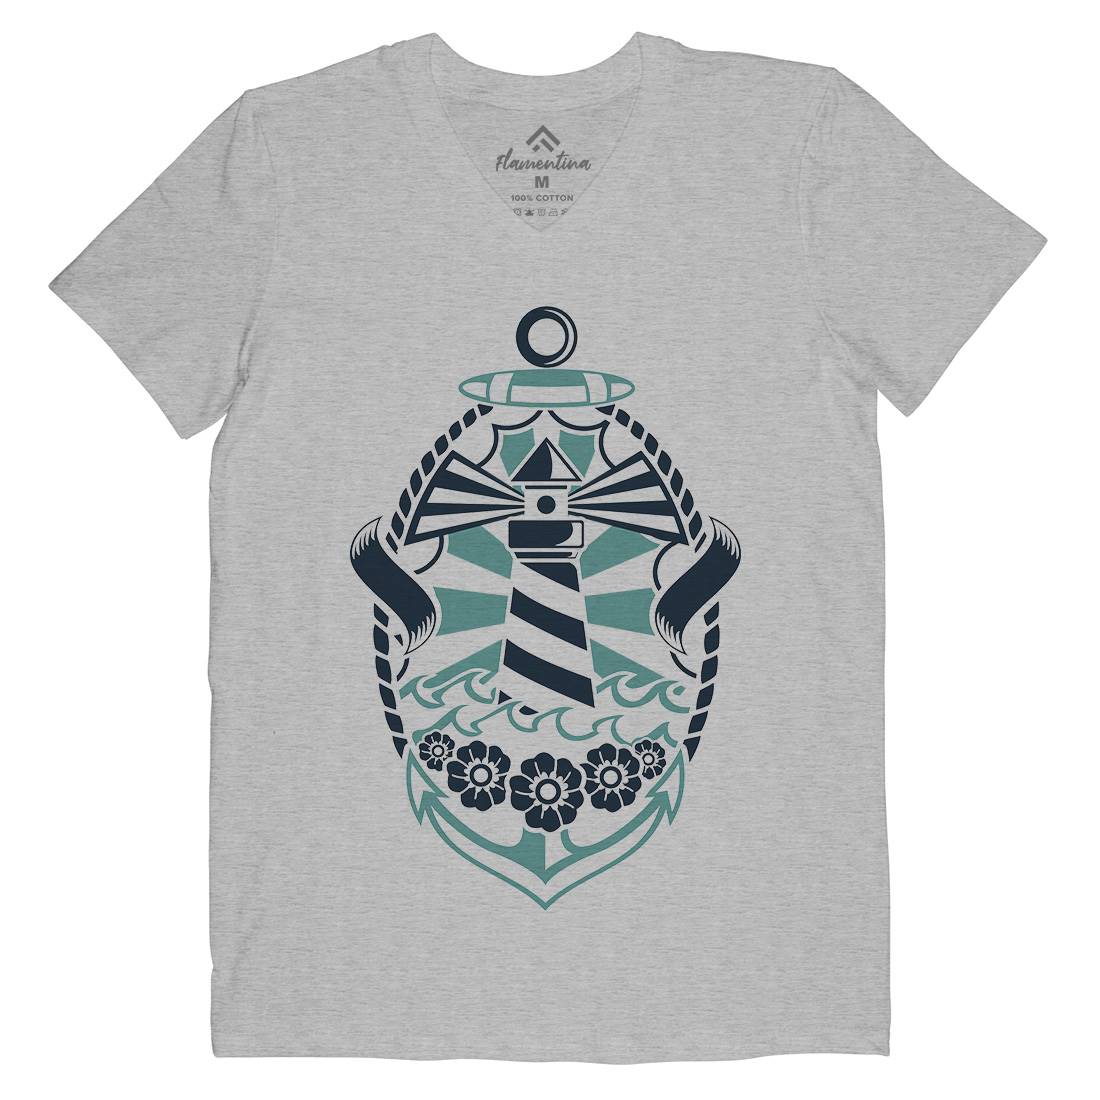 Lighthouse Mens Organic V-Neck T-Shirt Navy A086